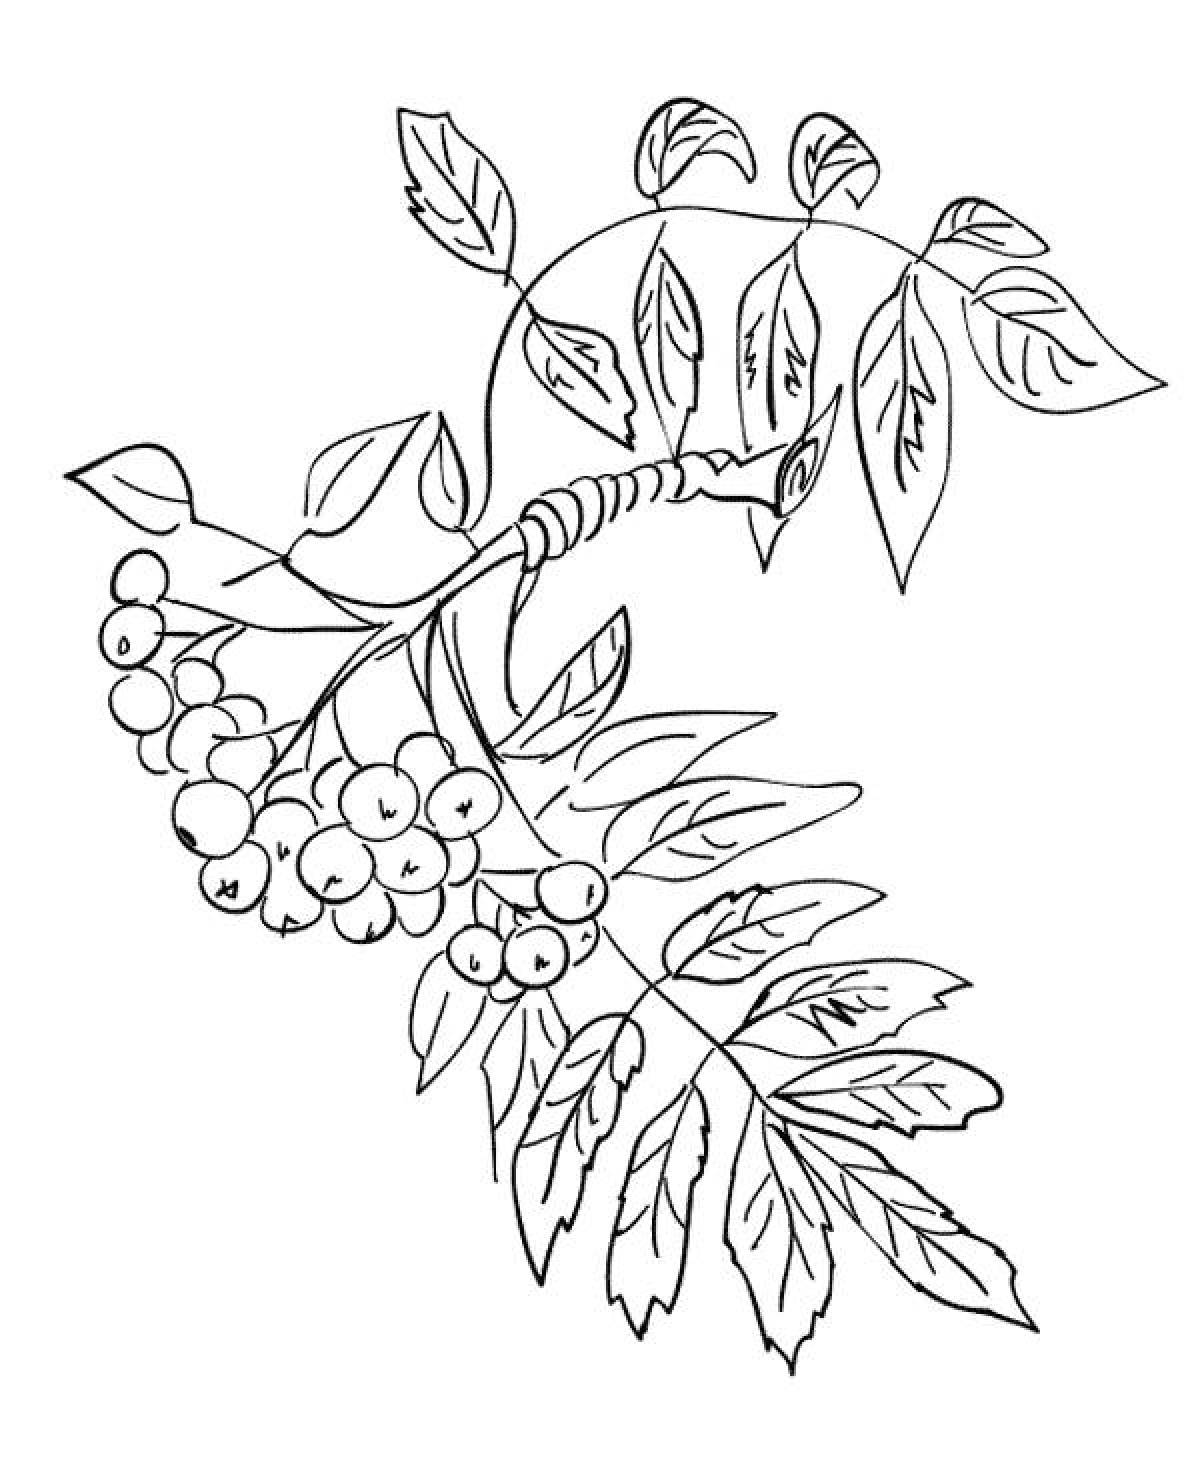 Rowan Branch coloring page printable